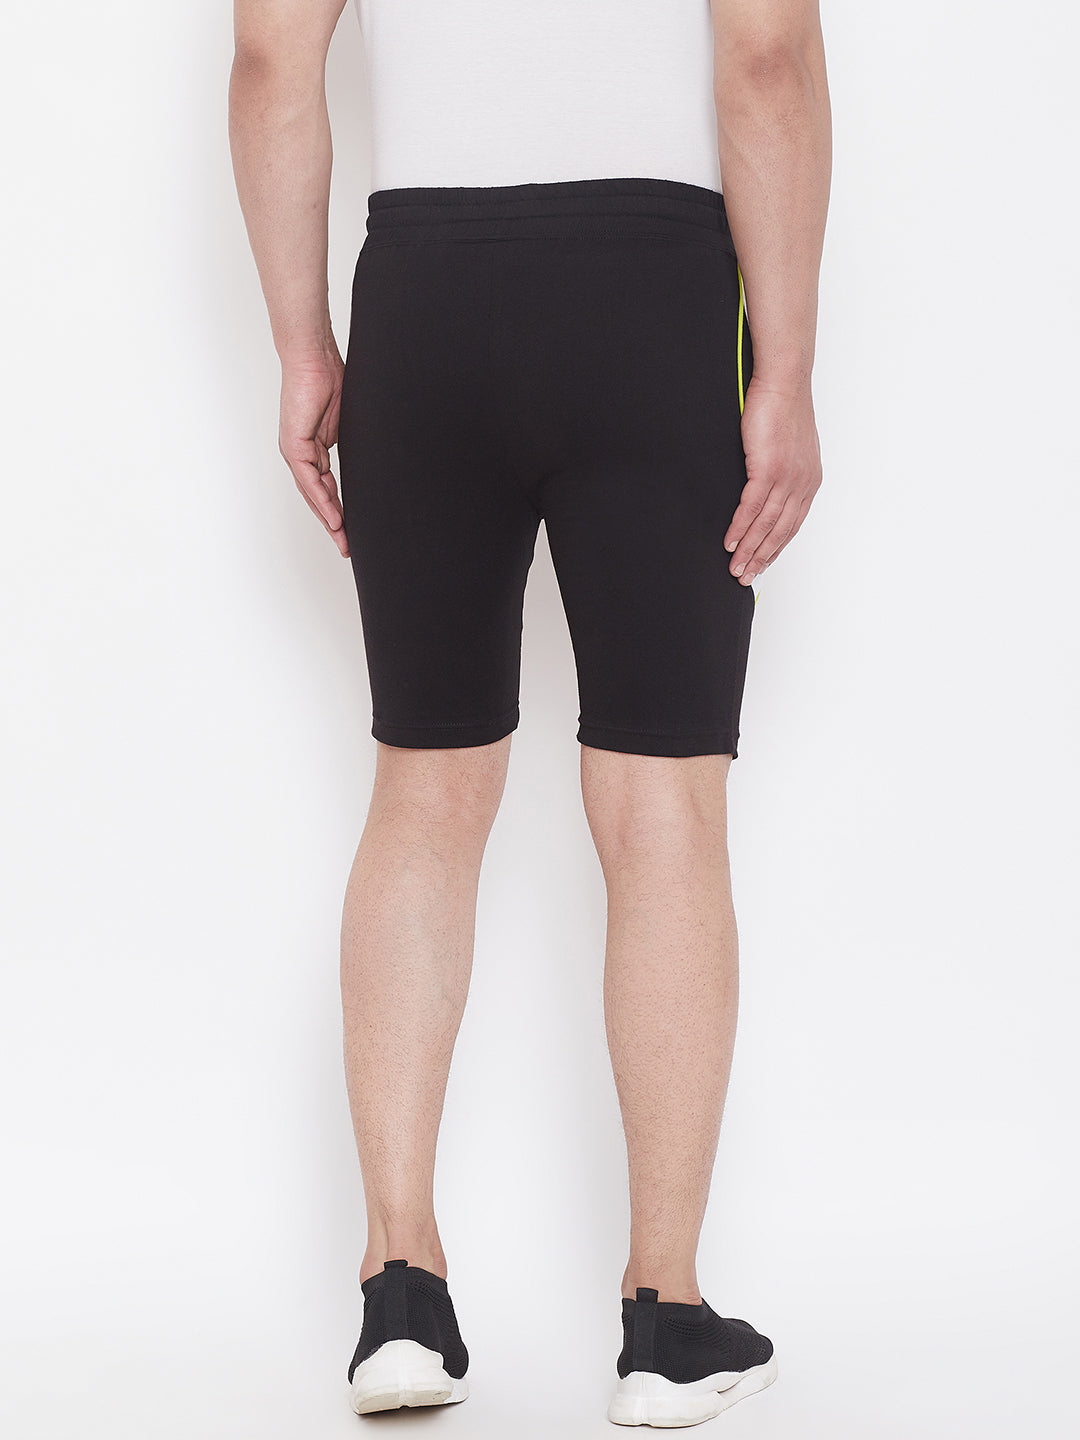 Black/White Men'S Color Block Shorts